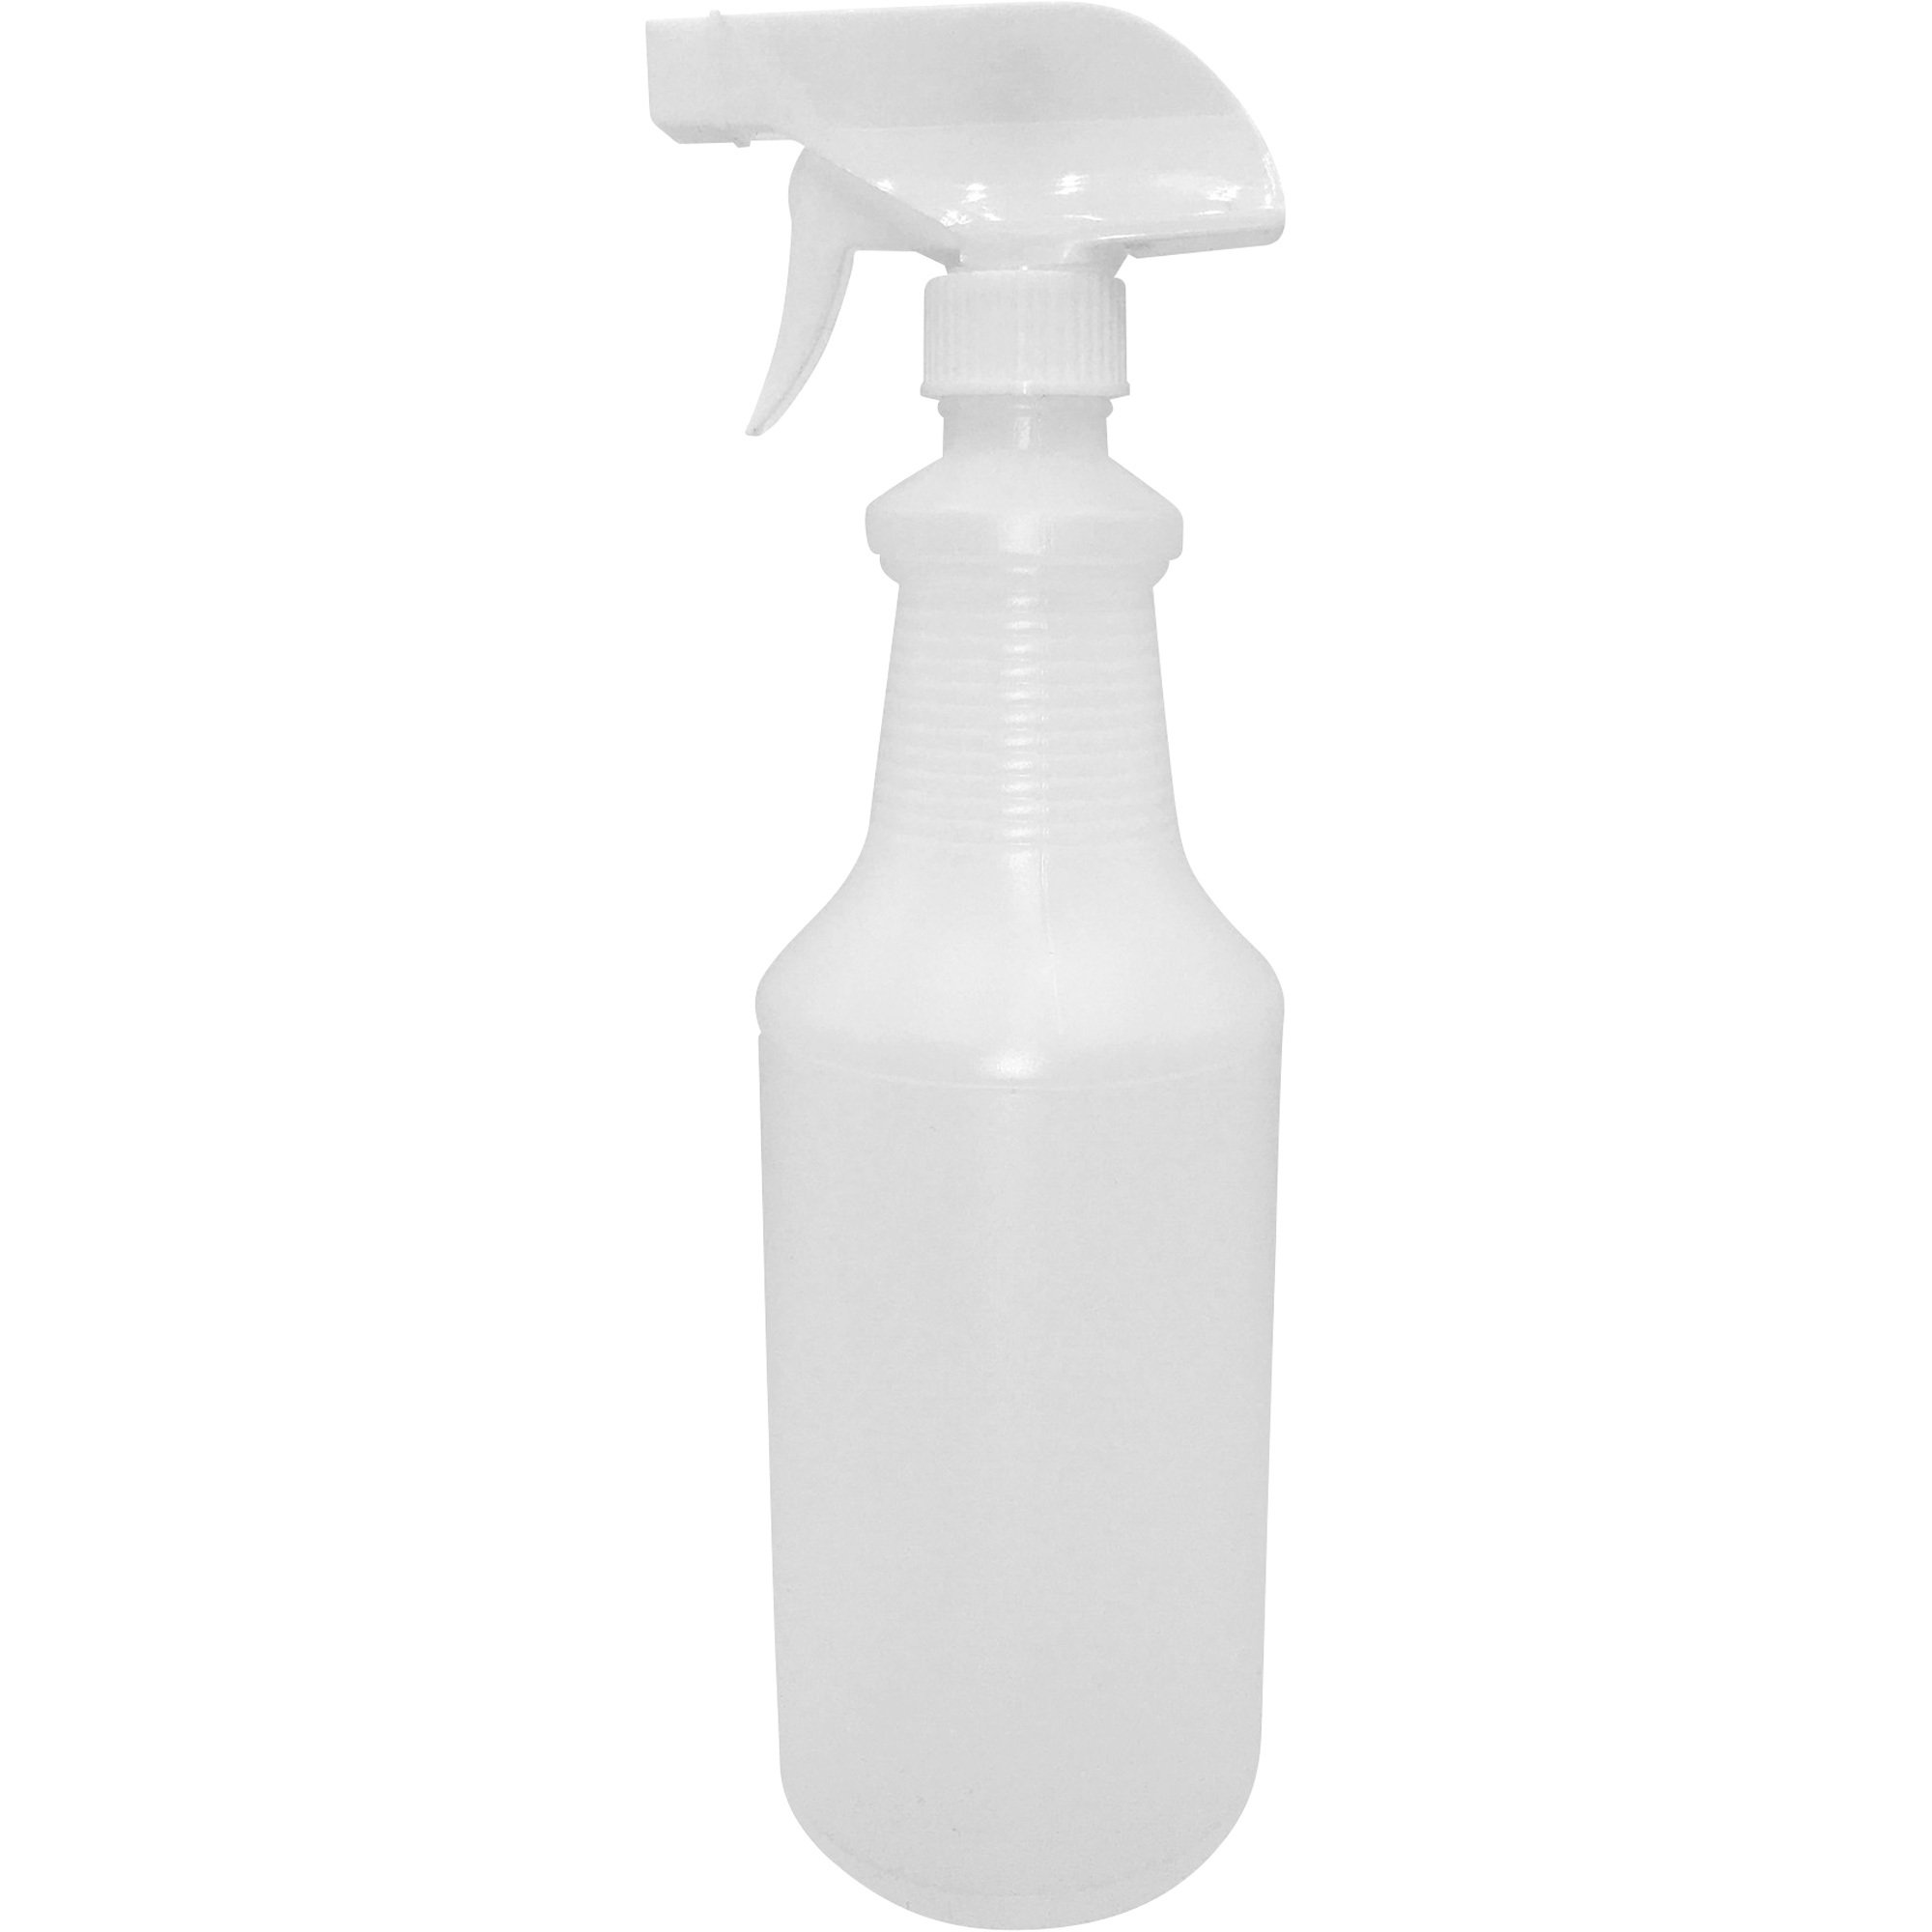 SupplyAID 32oz Heavy-Duty All-Purpose Spray Bottles